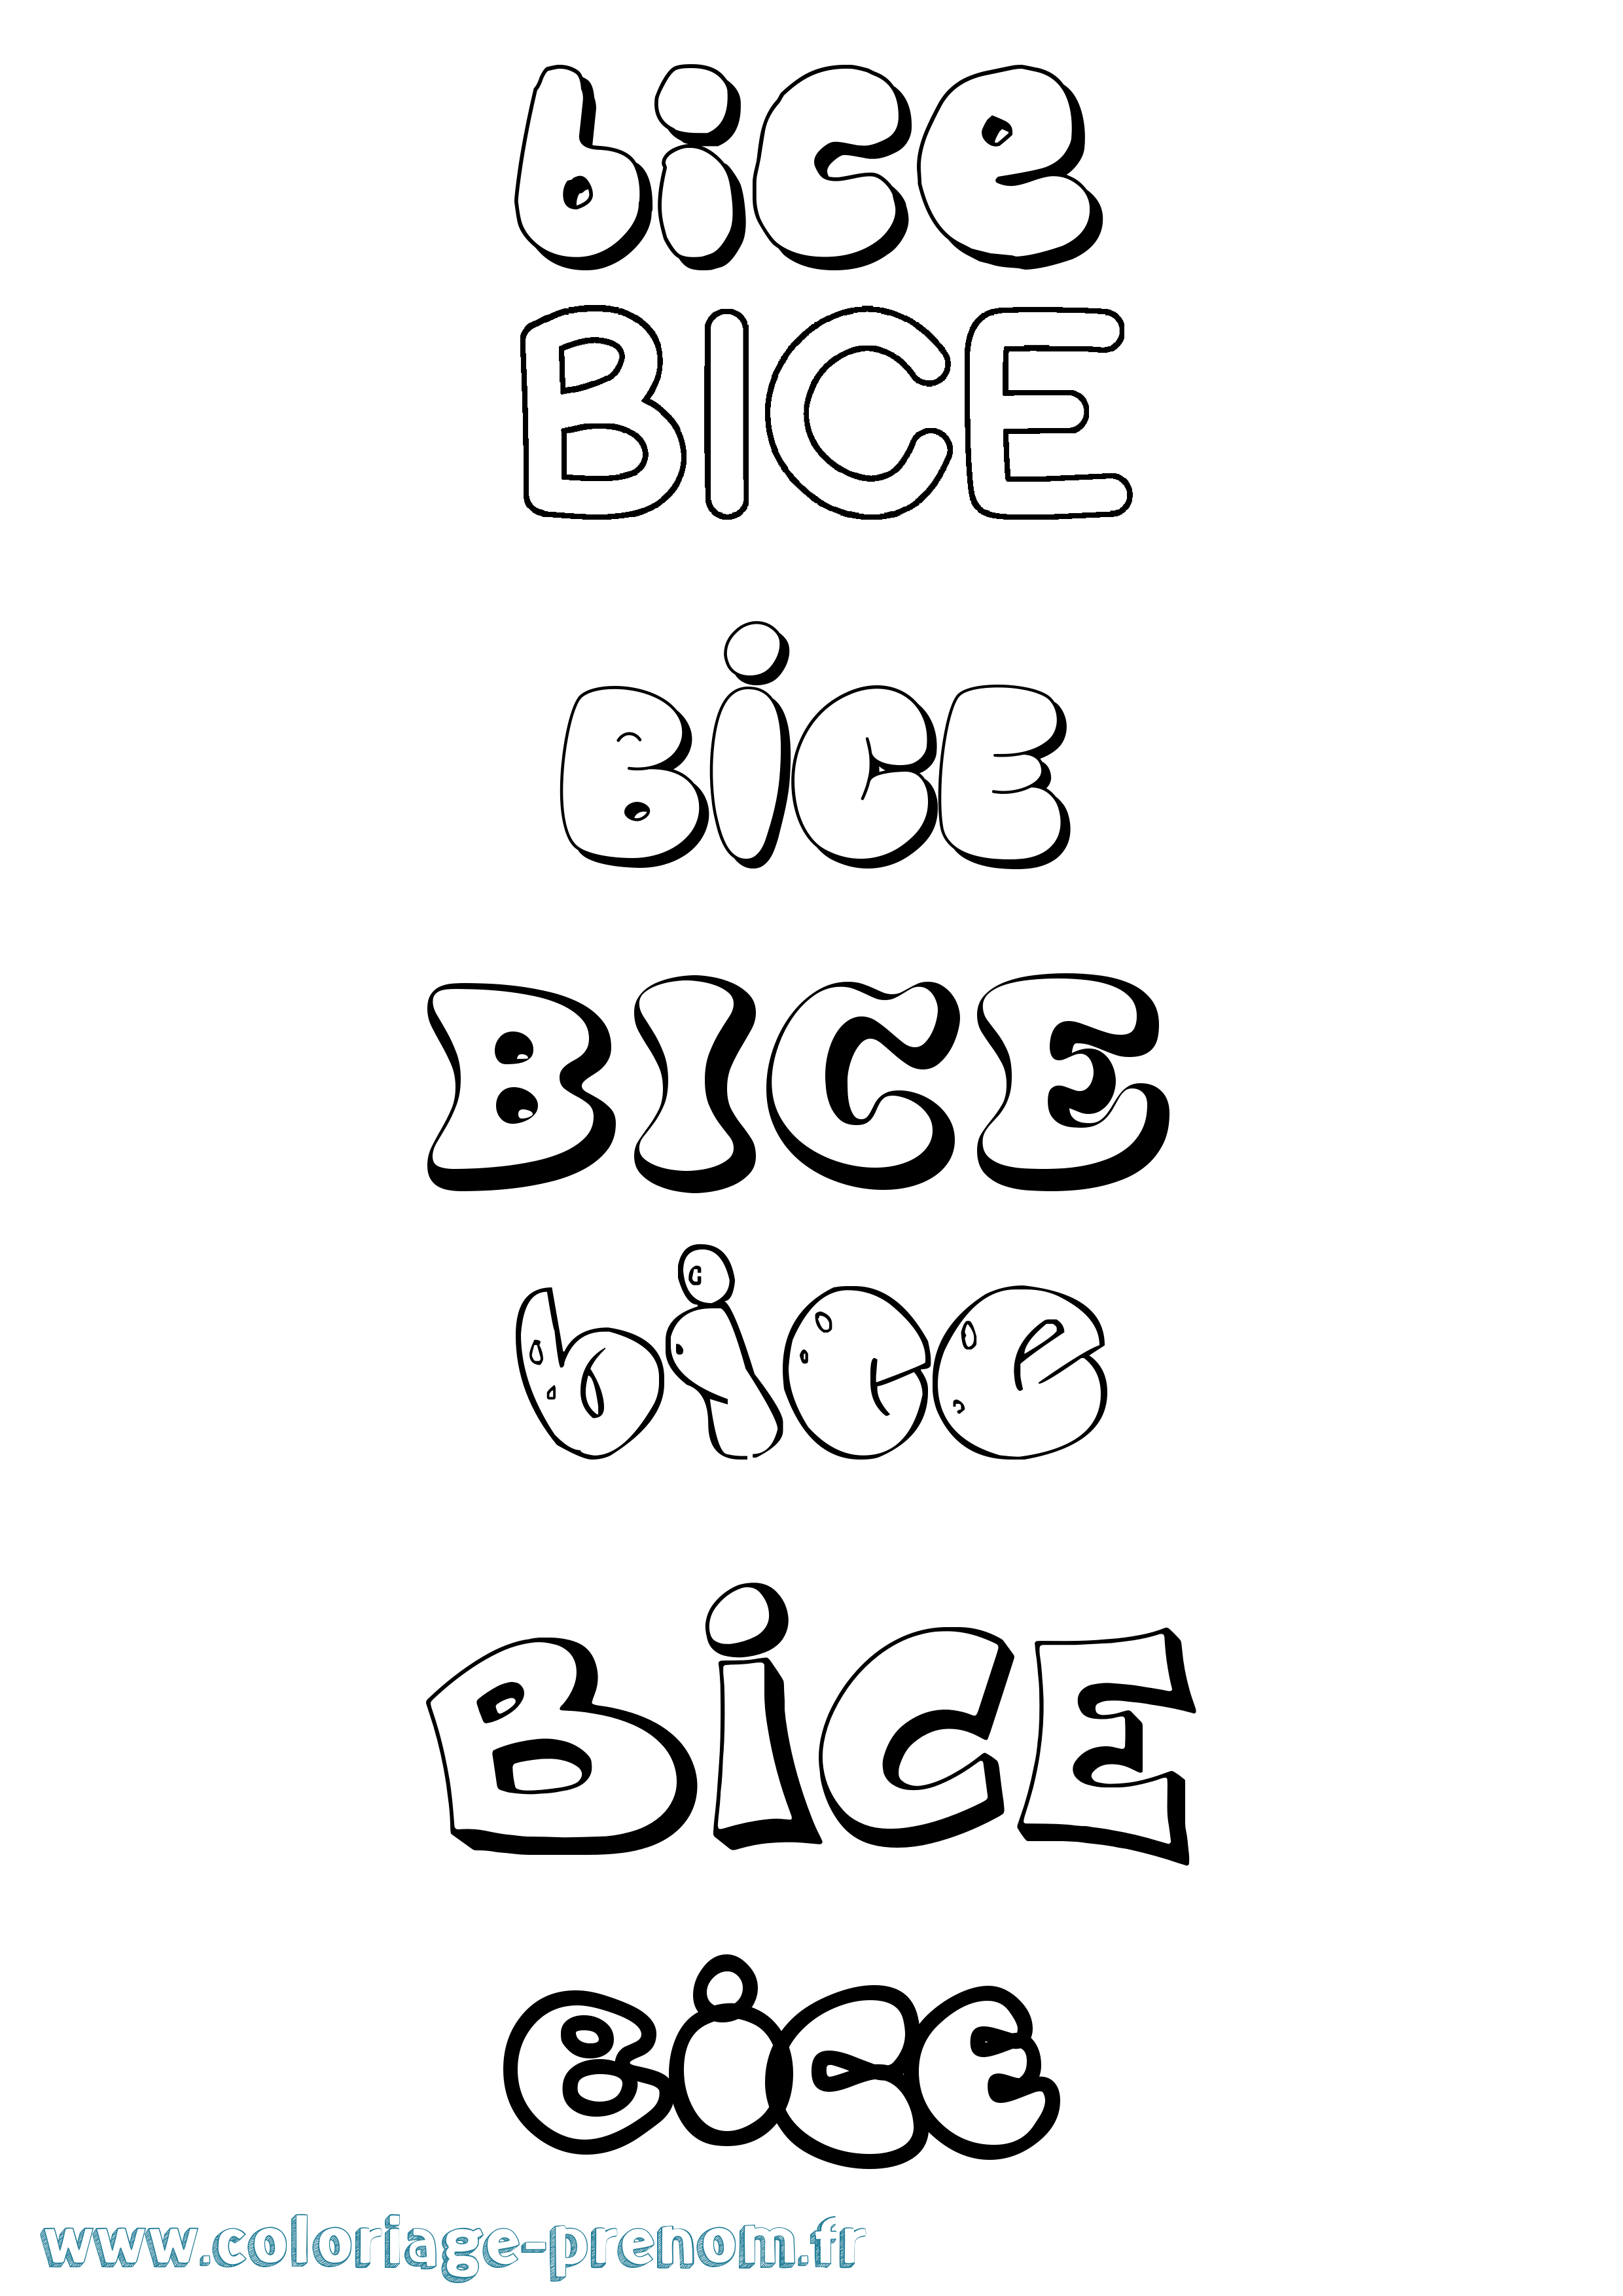 Coloriage prénom Bice Bubble